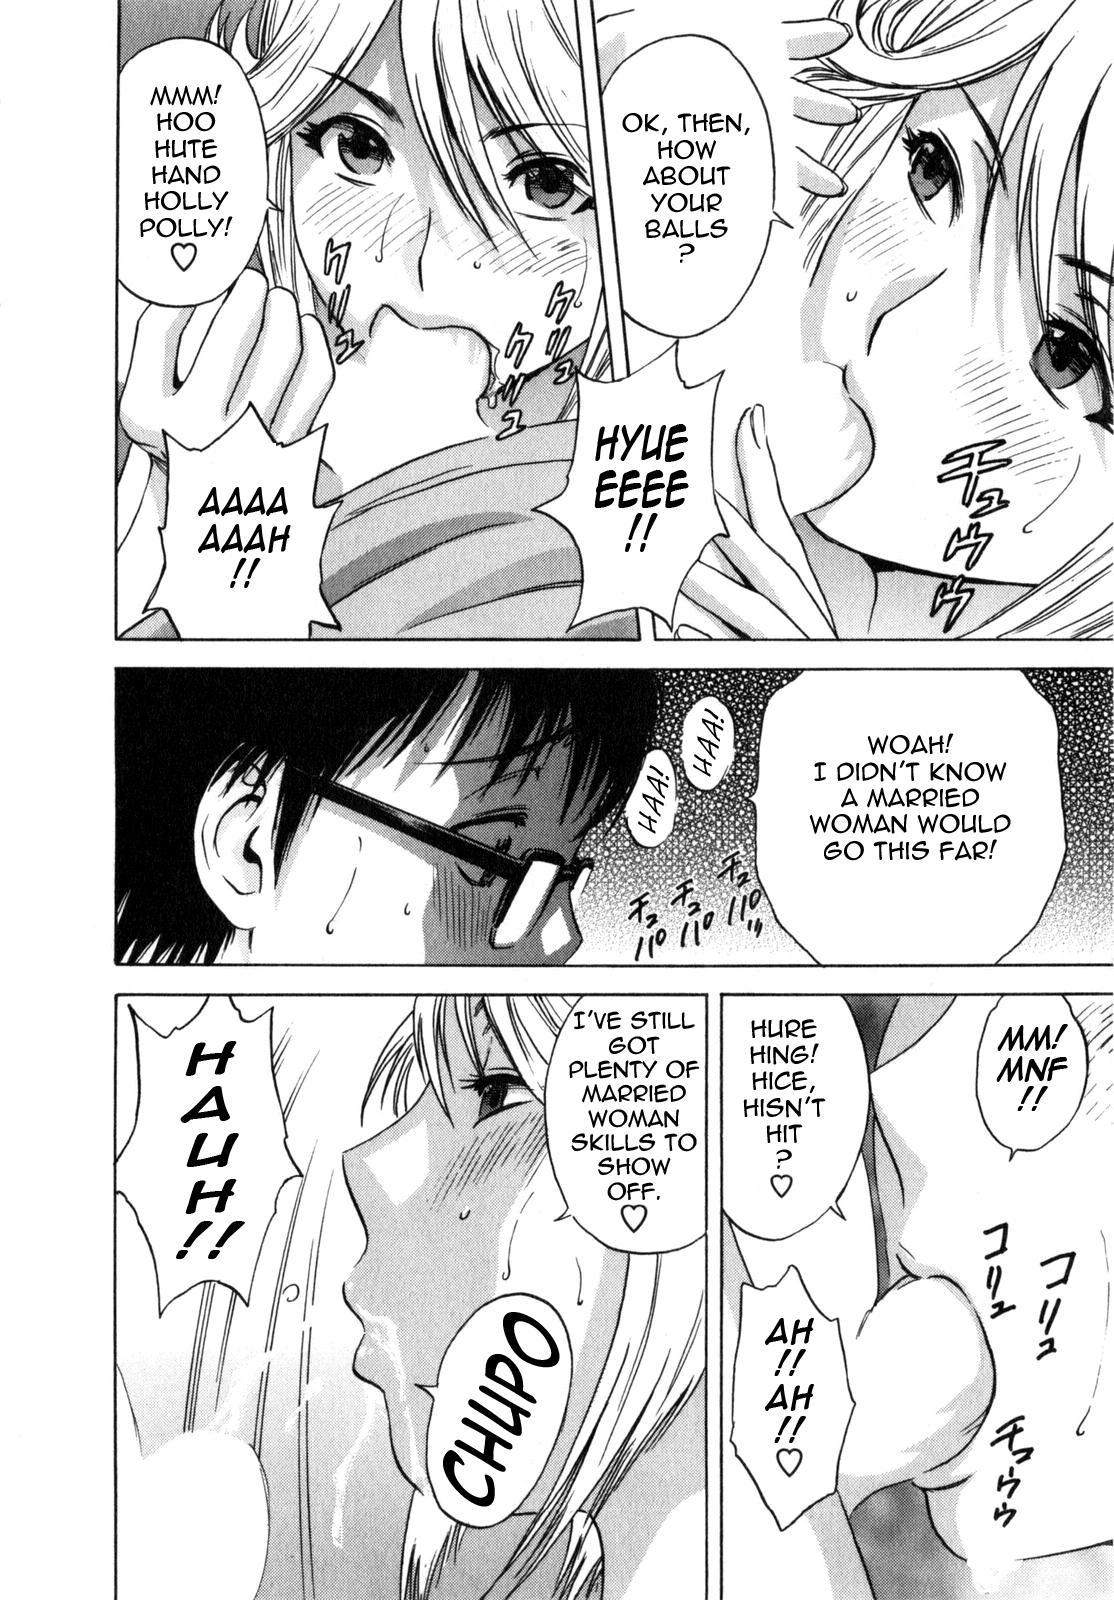 [Hidemaru] Life with Married Women Just Like a Manga 1 - Ch. 1-4 [English] {Tadanohito} 35